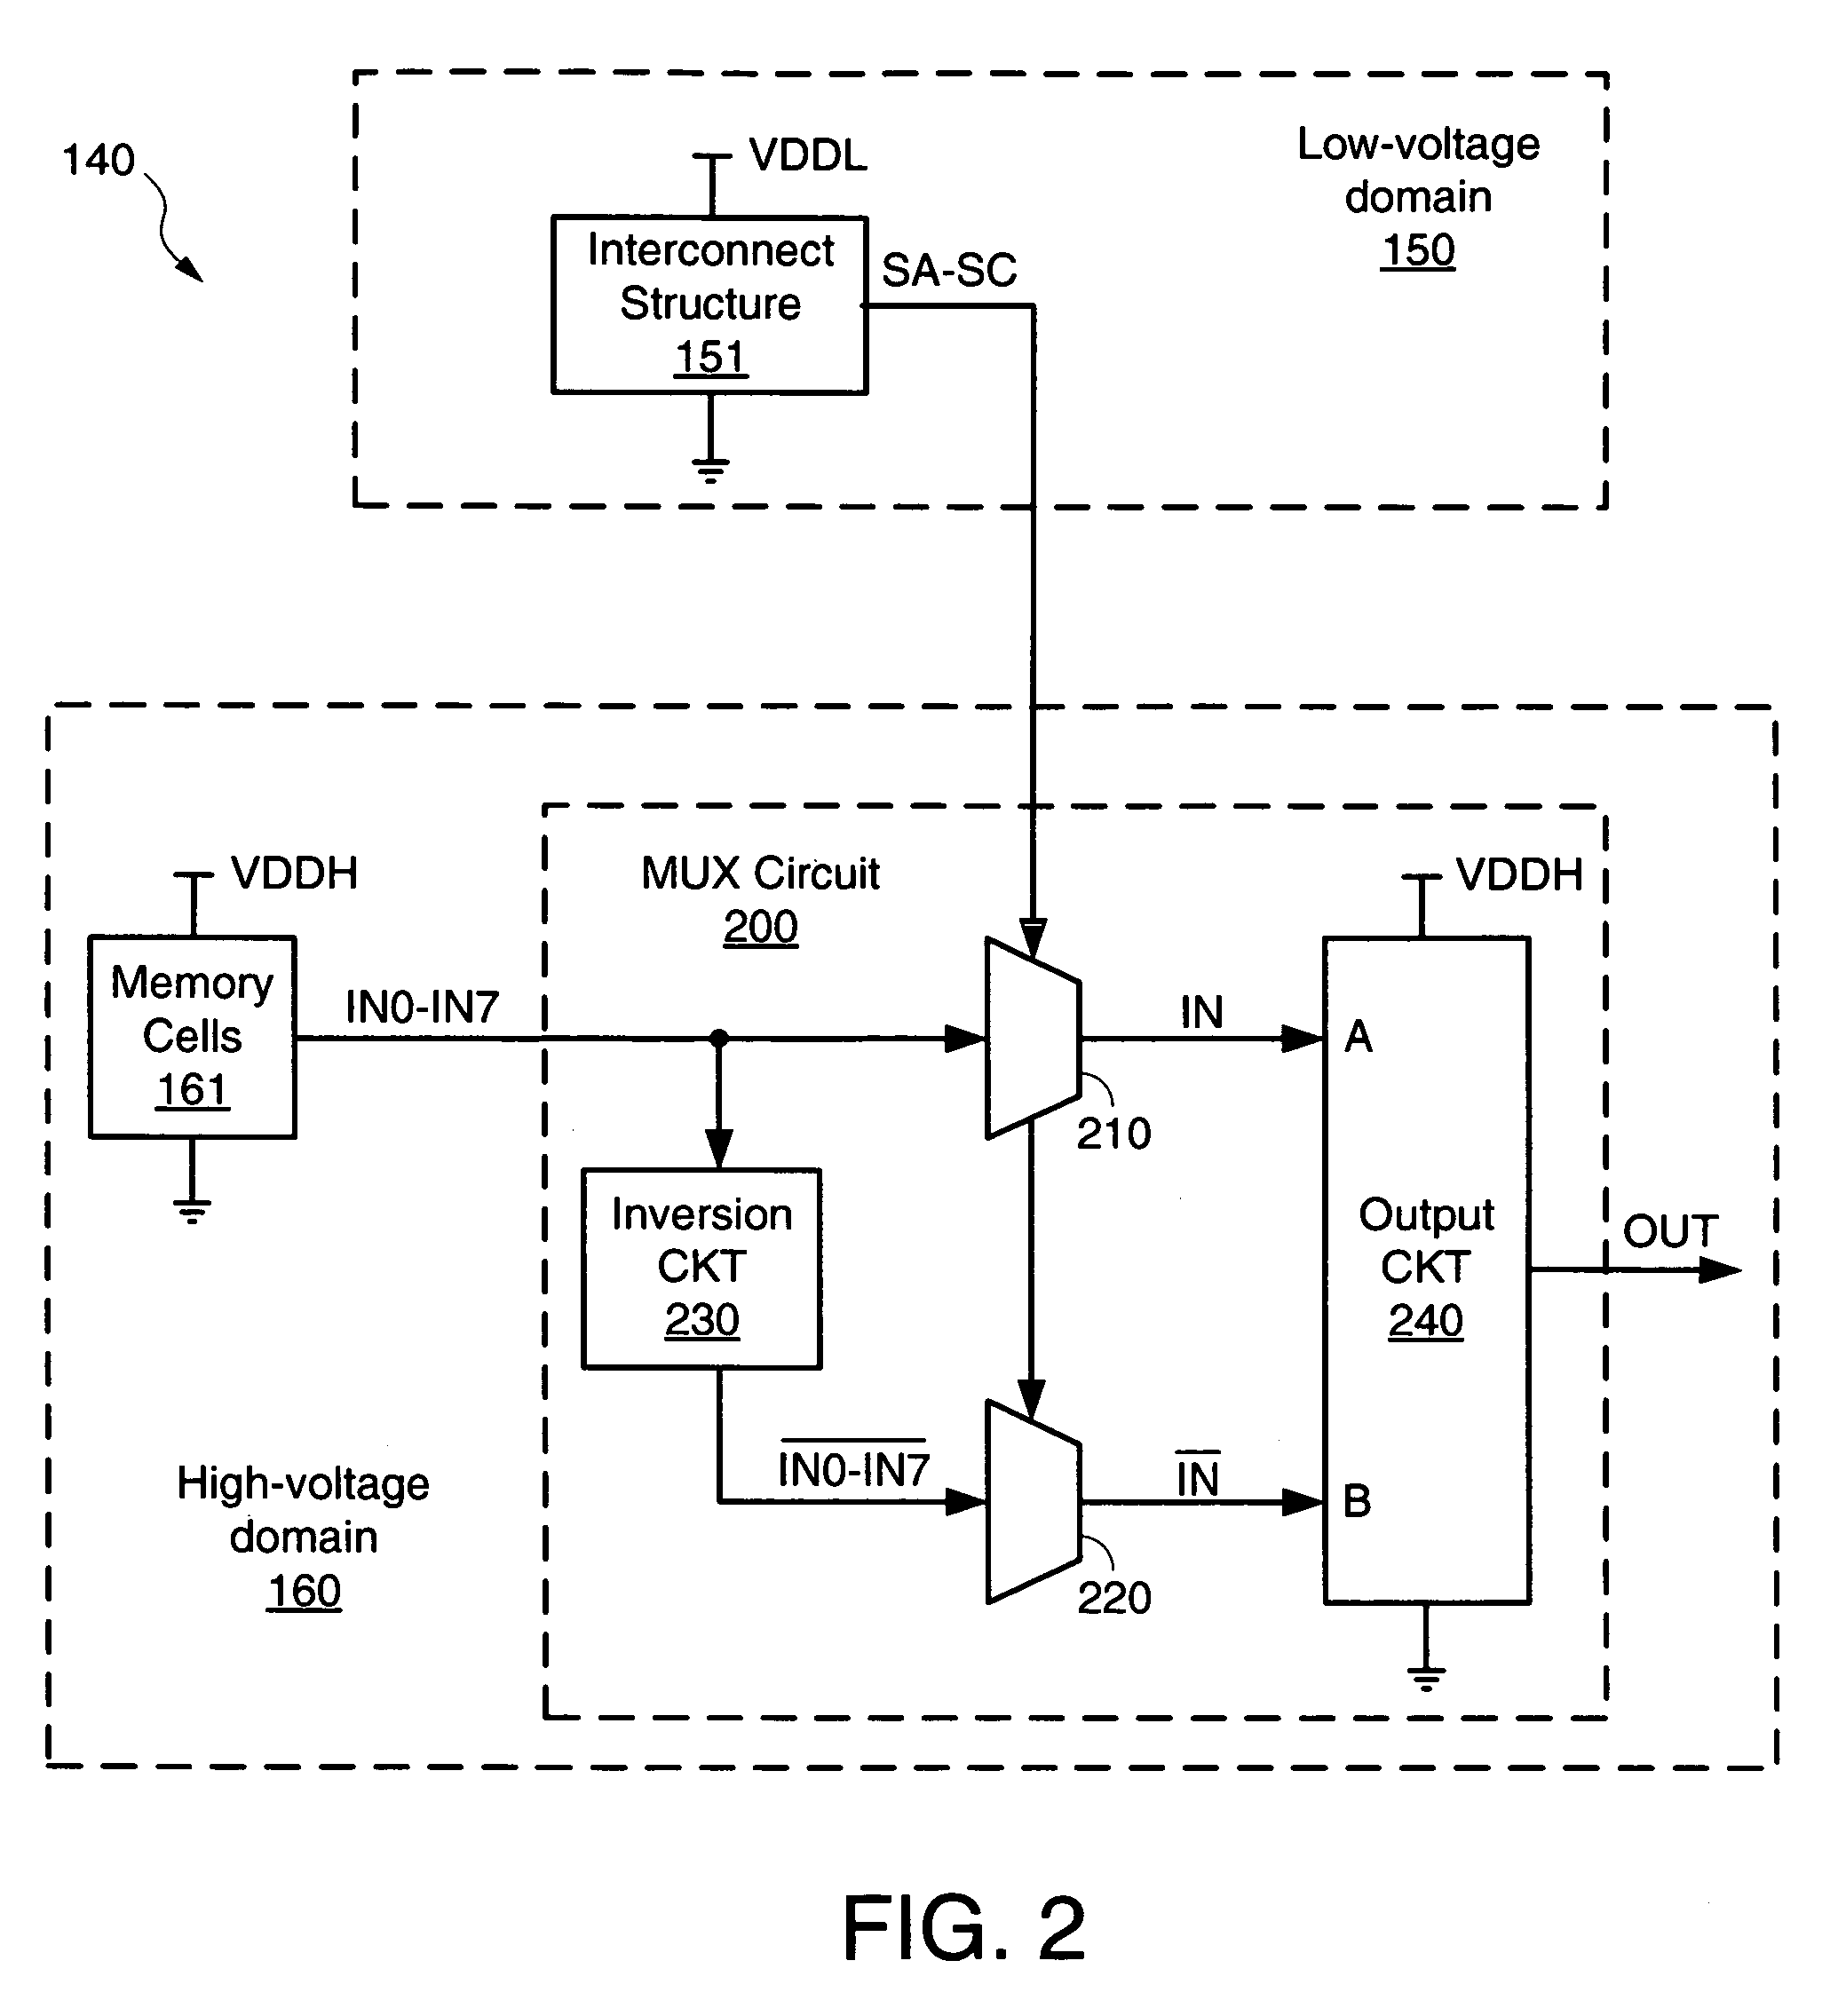 Level-shifting pass gate multiplexer